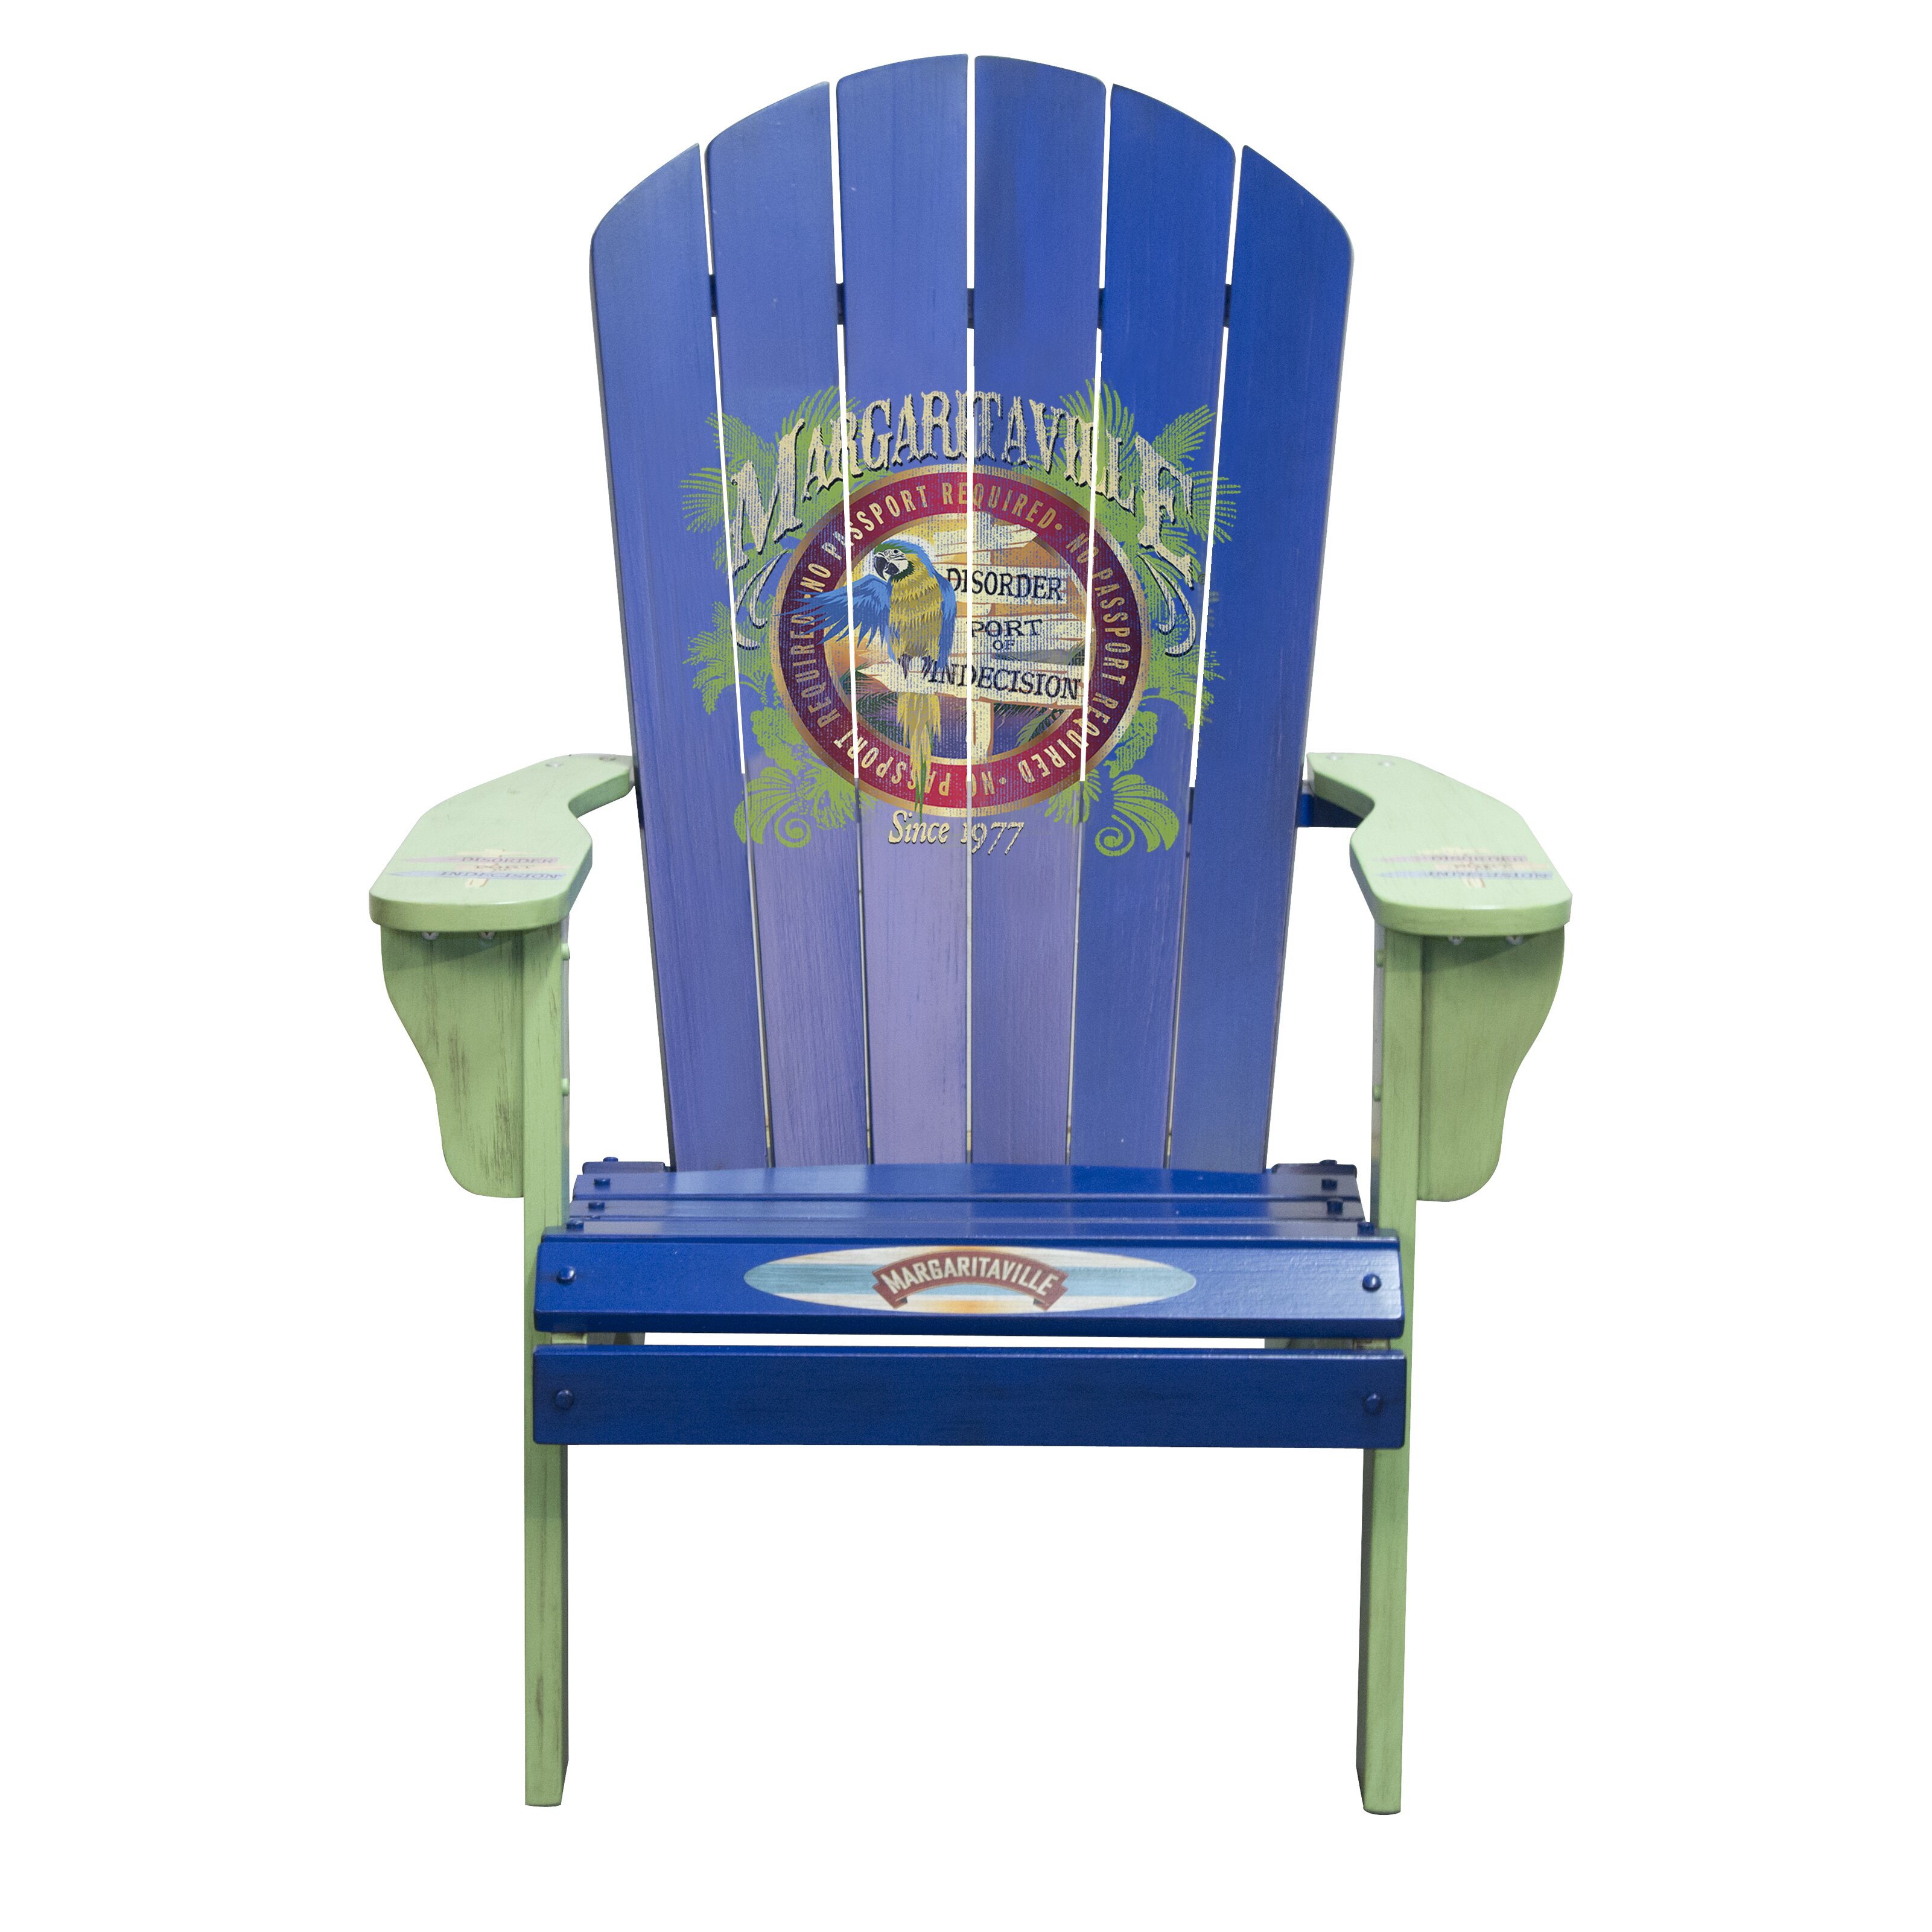 Margaritaville "Port of Indecision" Adirondack Chair